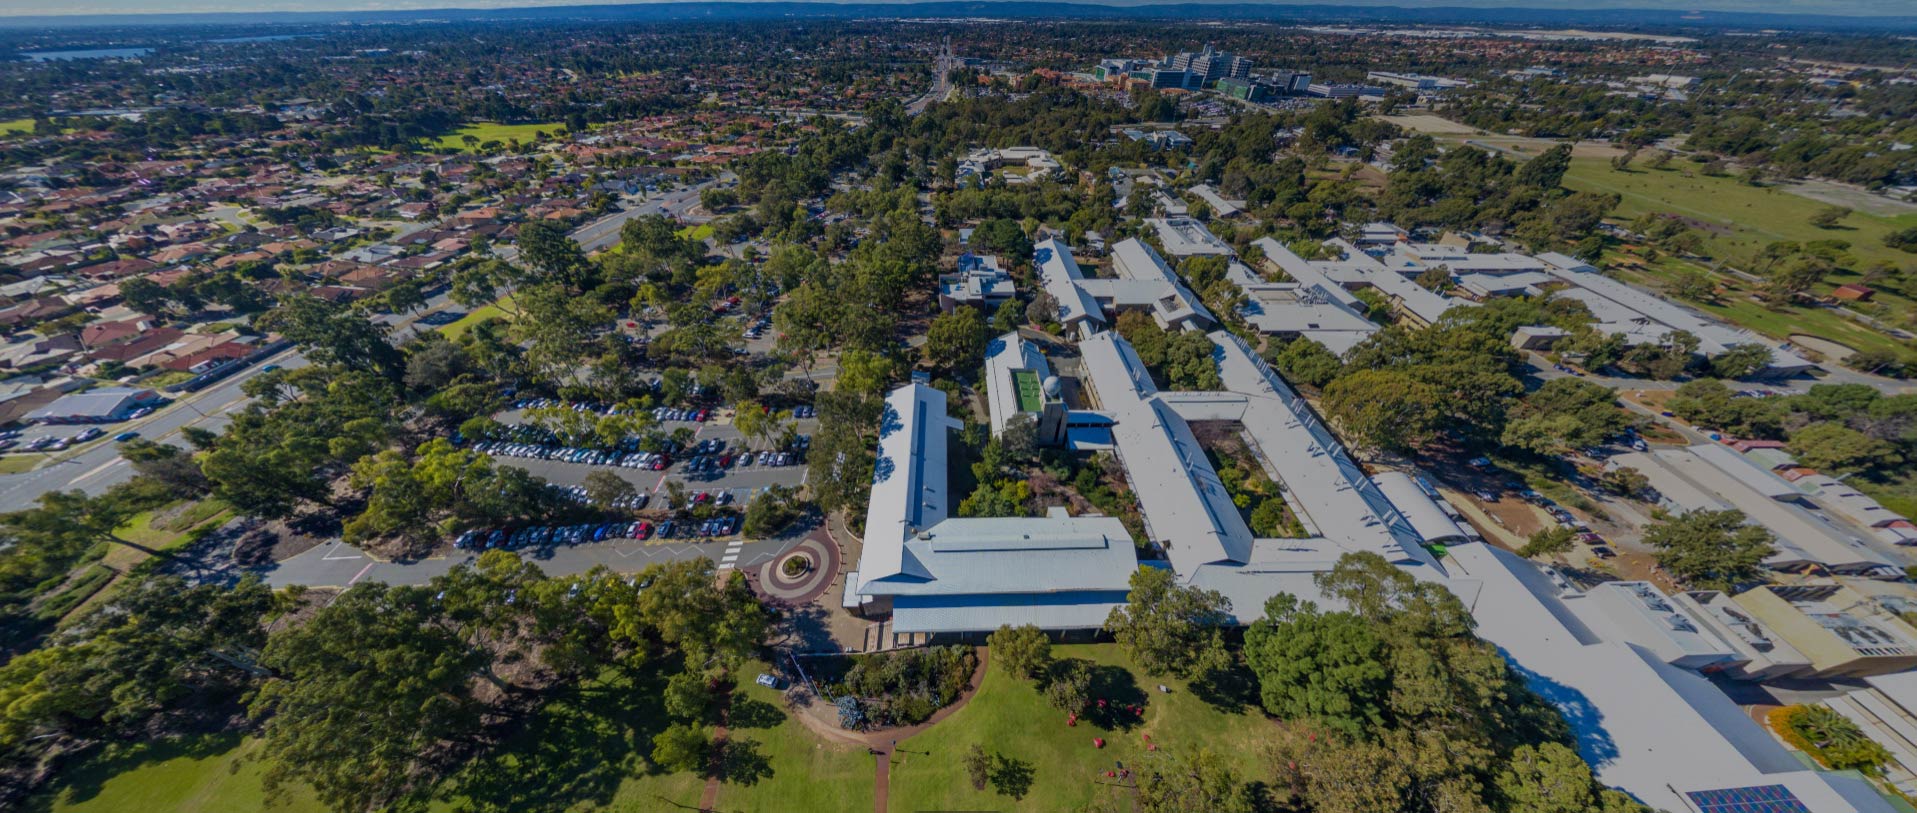 Aerial of Murdoch's Perth Campus